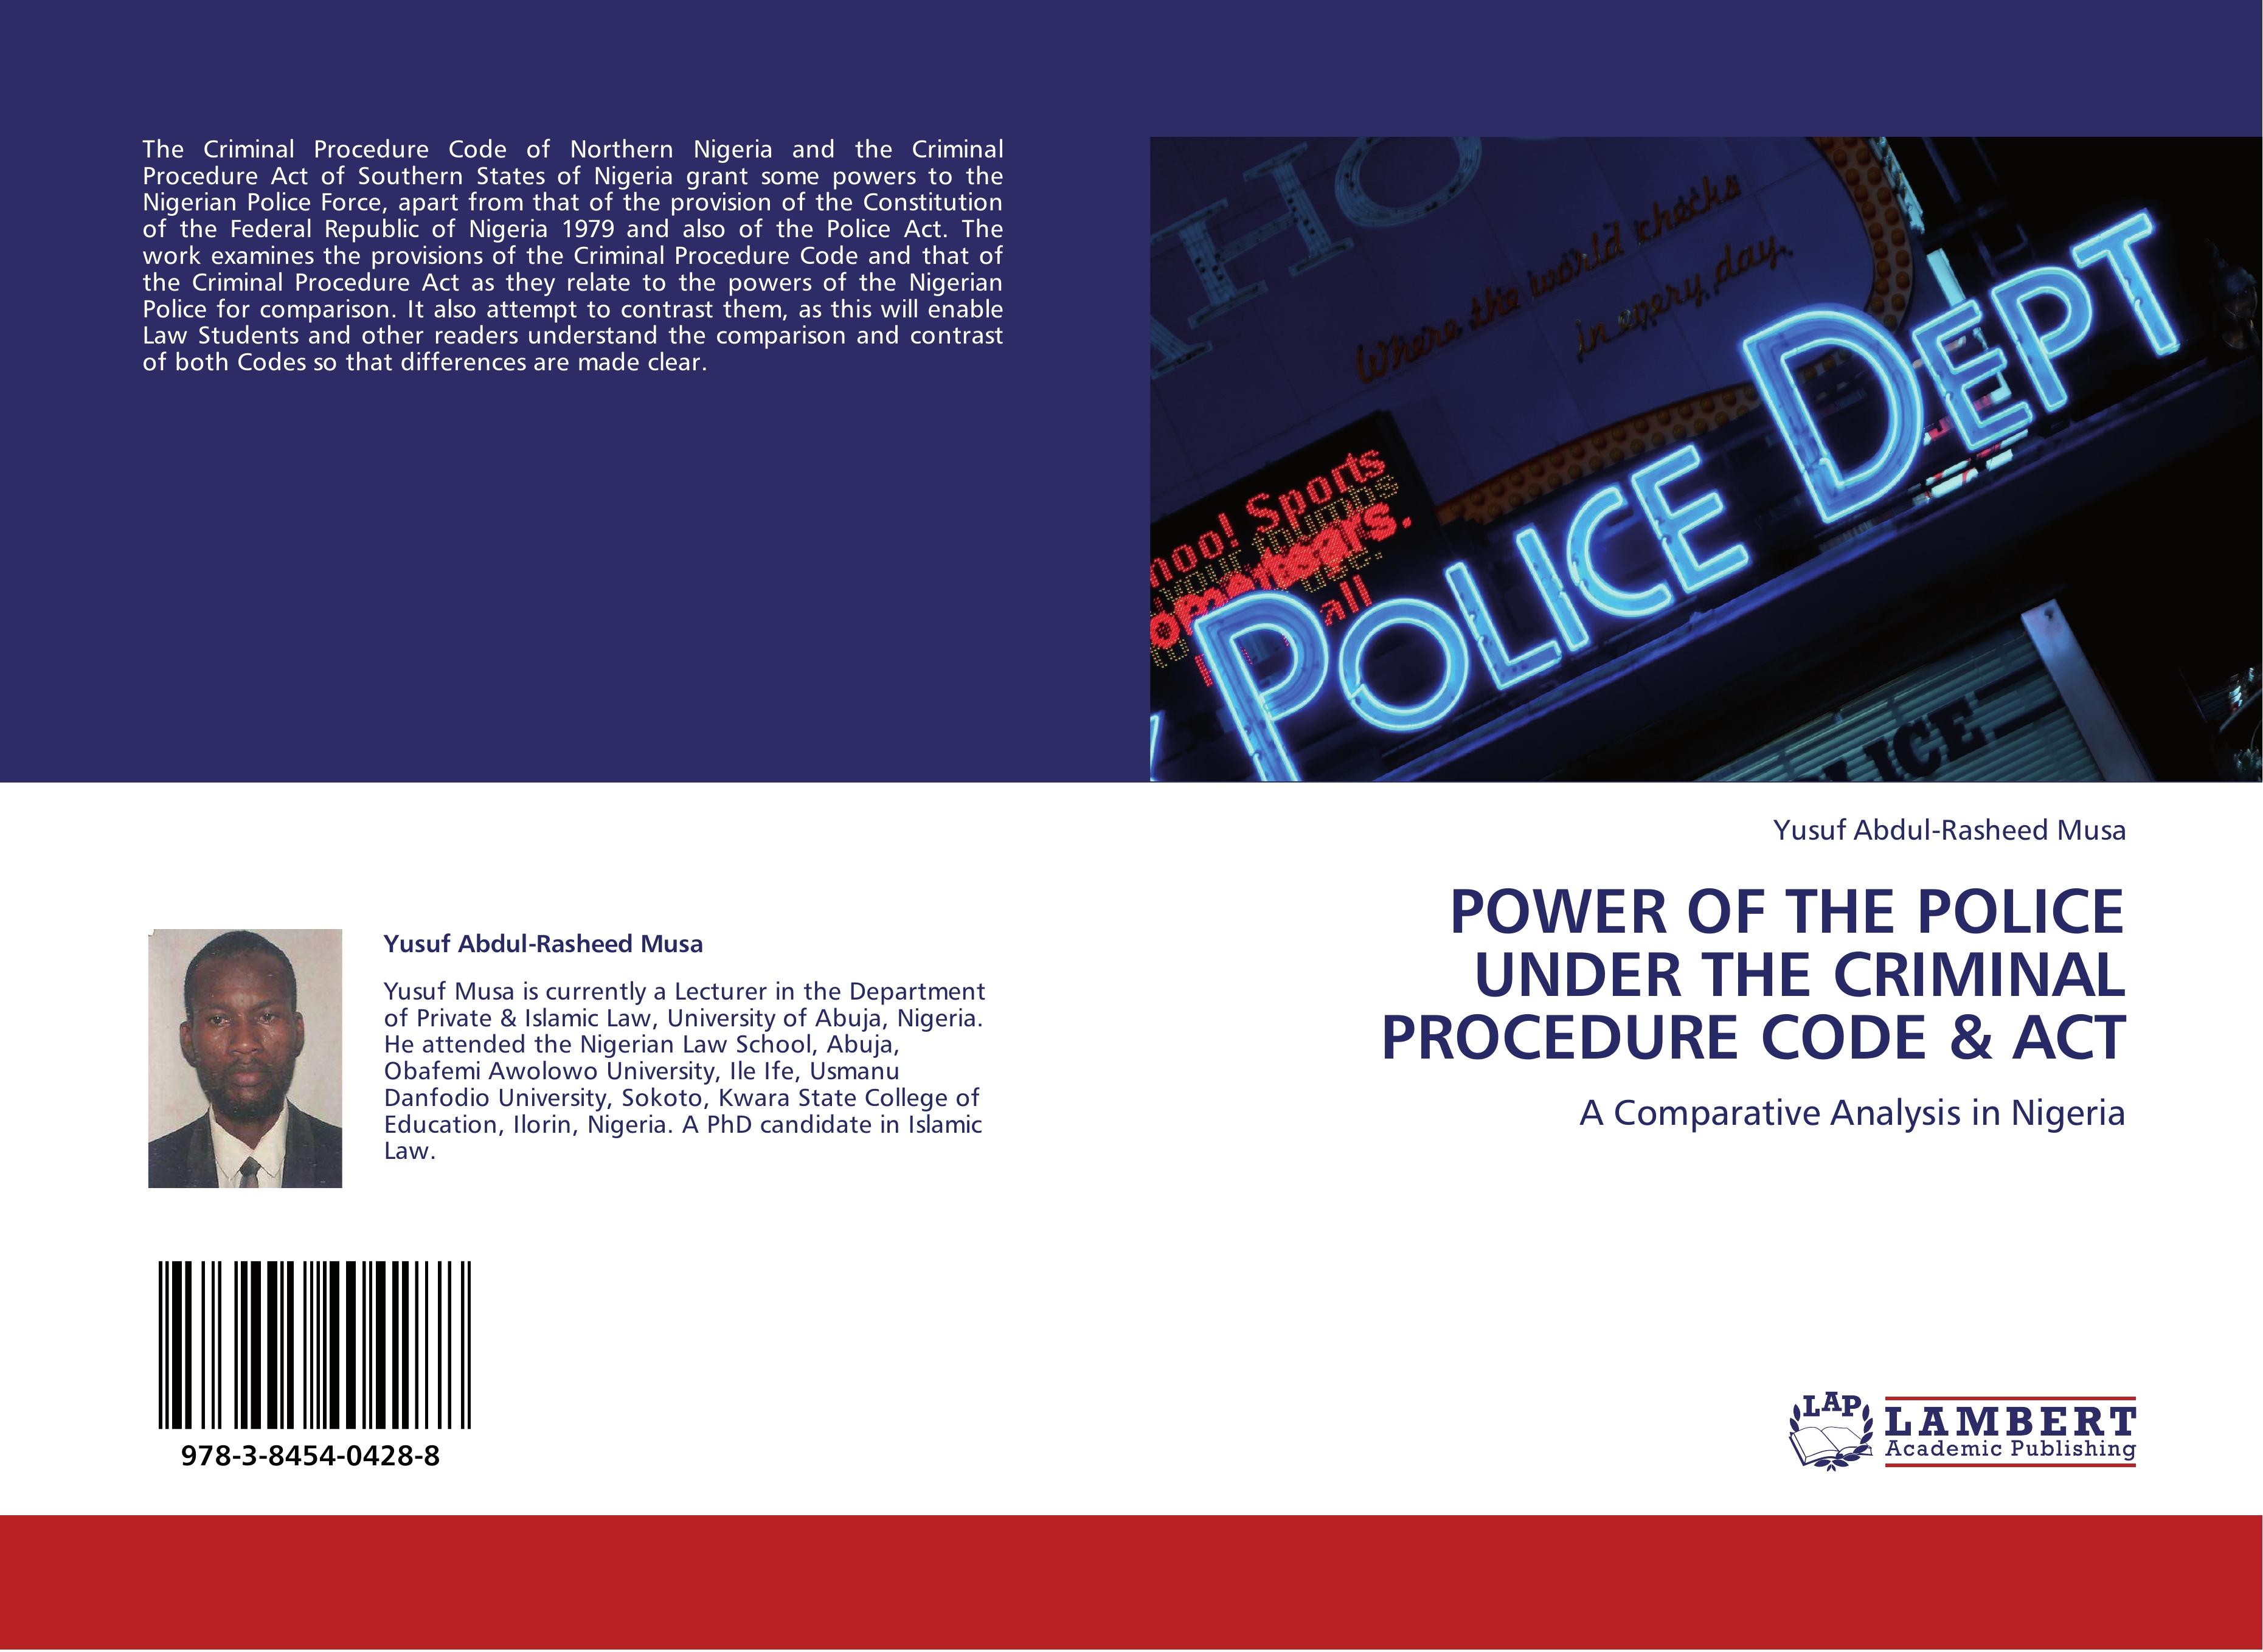 POWER OF THE POLICE UNDER THE CRIMINAL PROCEDURE CODE & ACT - Yusuf Abdul-Rasheed Musa